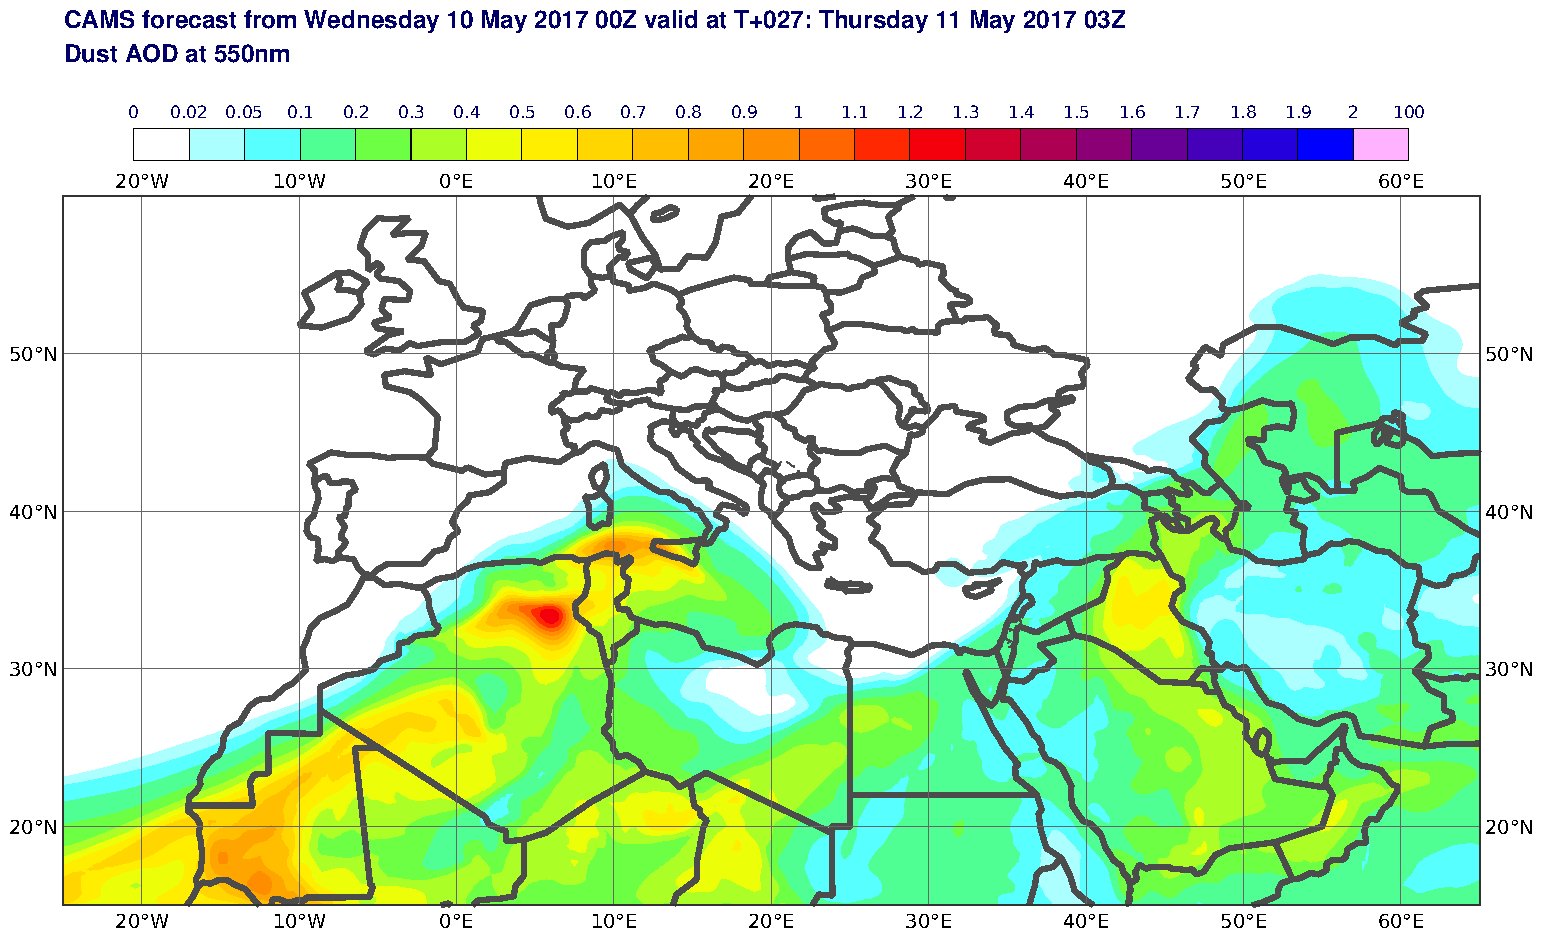 Dust AOD at 550nm valid at T27 - 2017-05-11 03:00